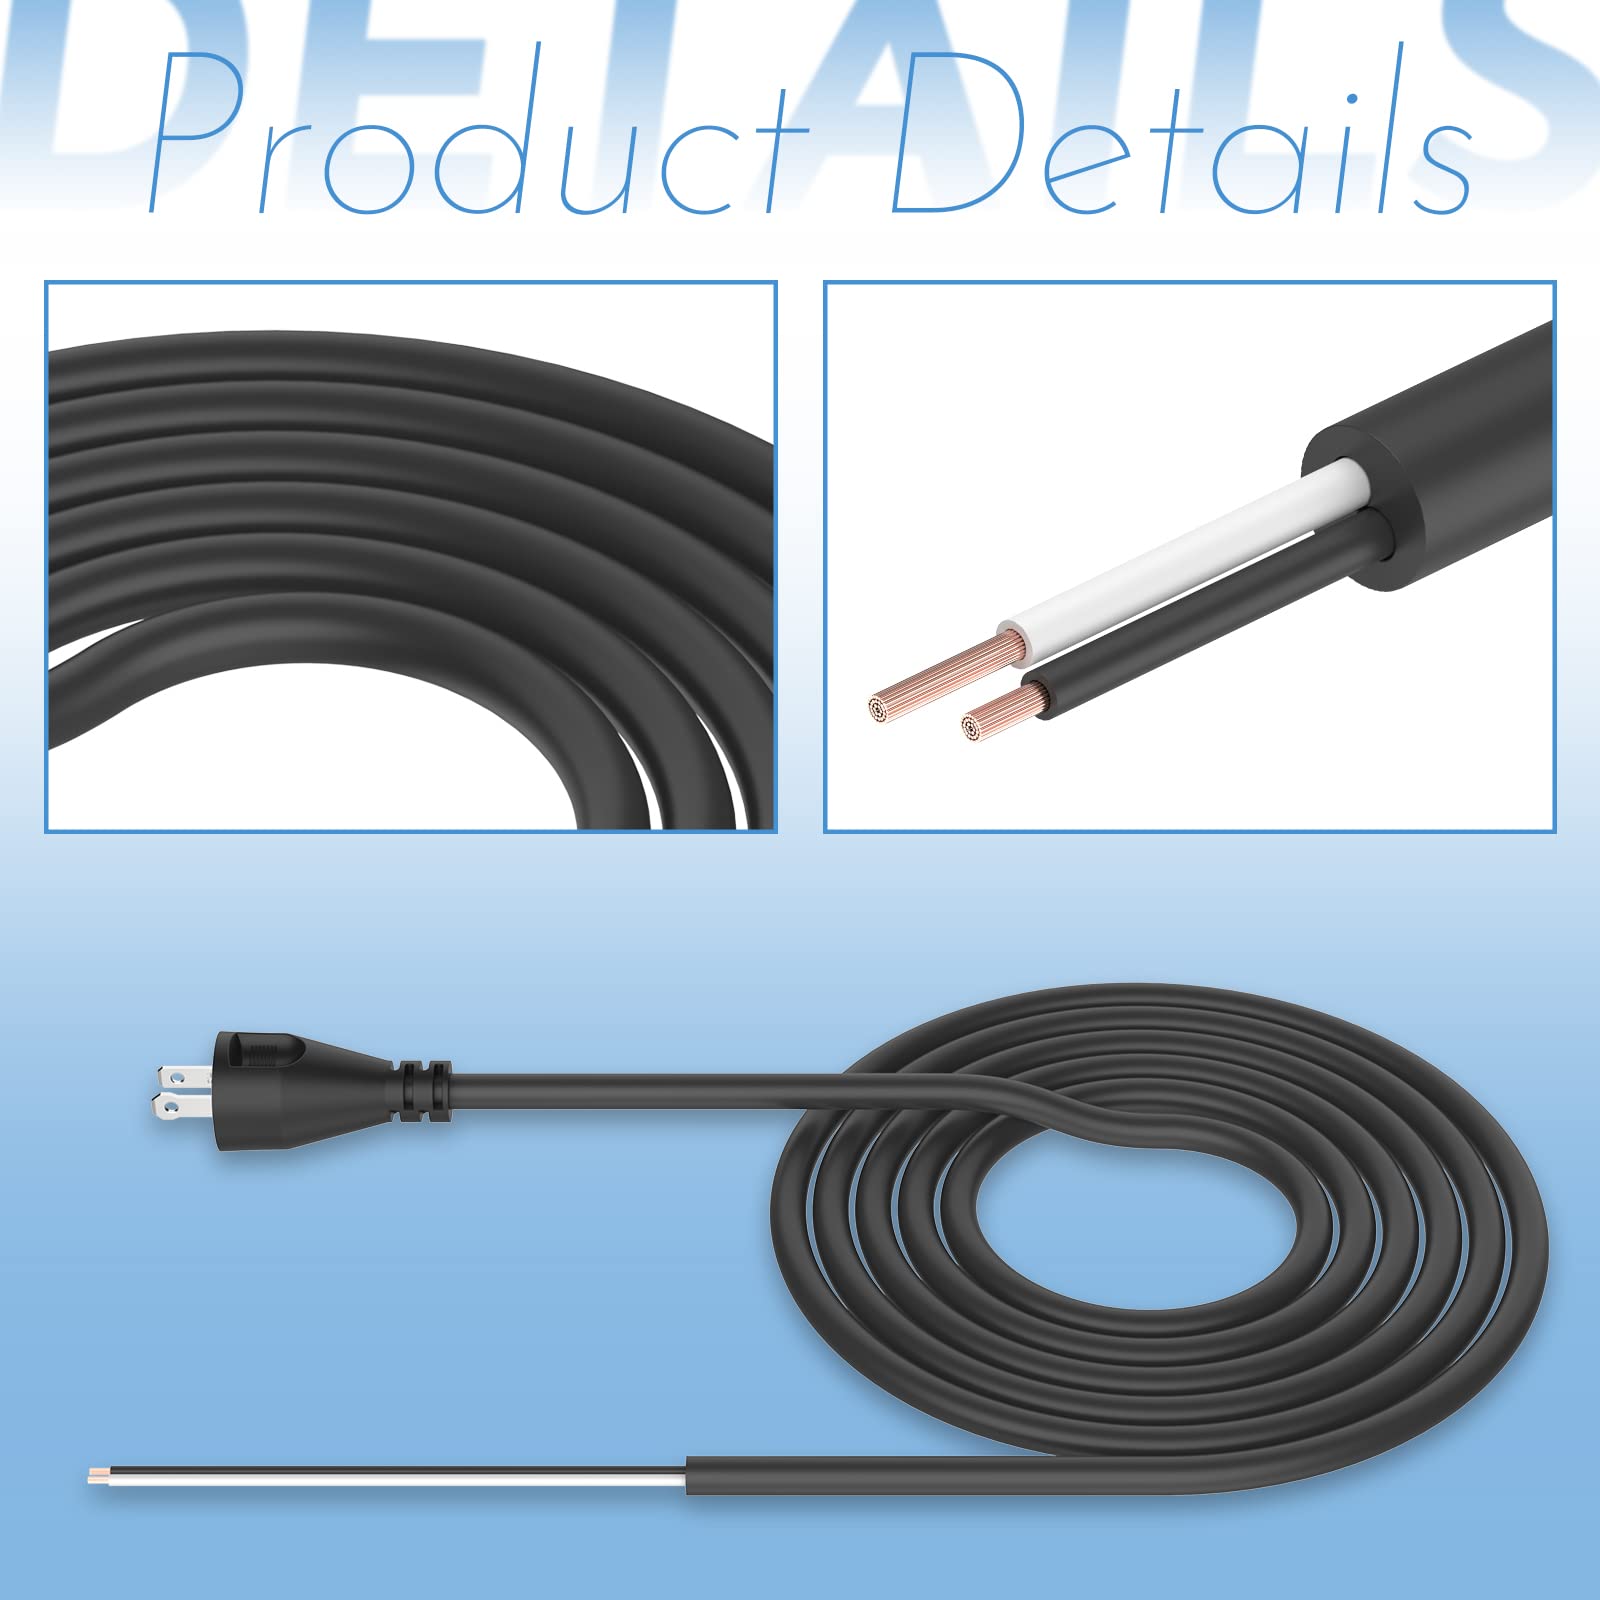 ANTOBLE 33007898 2 Wire 16 Gauge Power Cord Replacement Cord for DEWALT DW704 DW705 DW708 DW718 DW849 DW360 DW384 DWP849X (10 ft)